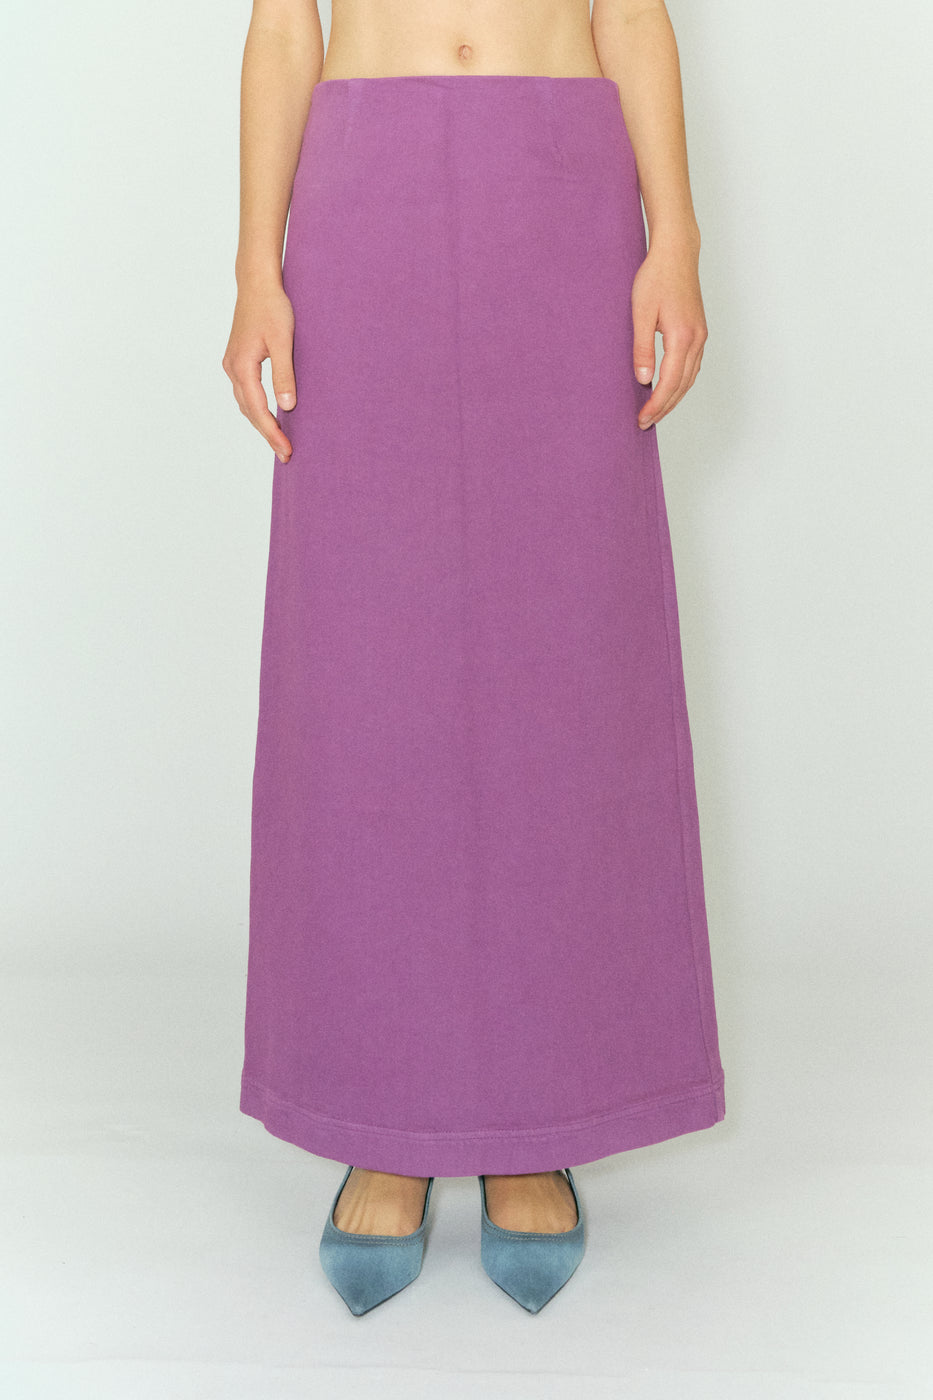 Tomorrow TRW-Kersee Maxi Skirt Color Skirt 44 Heather Purple